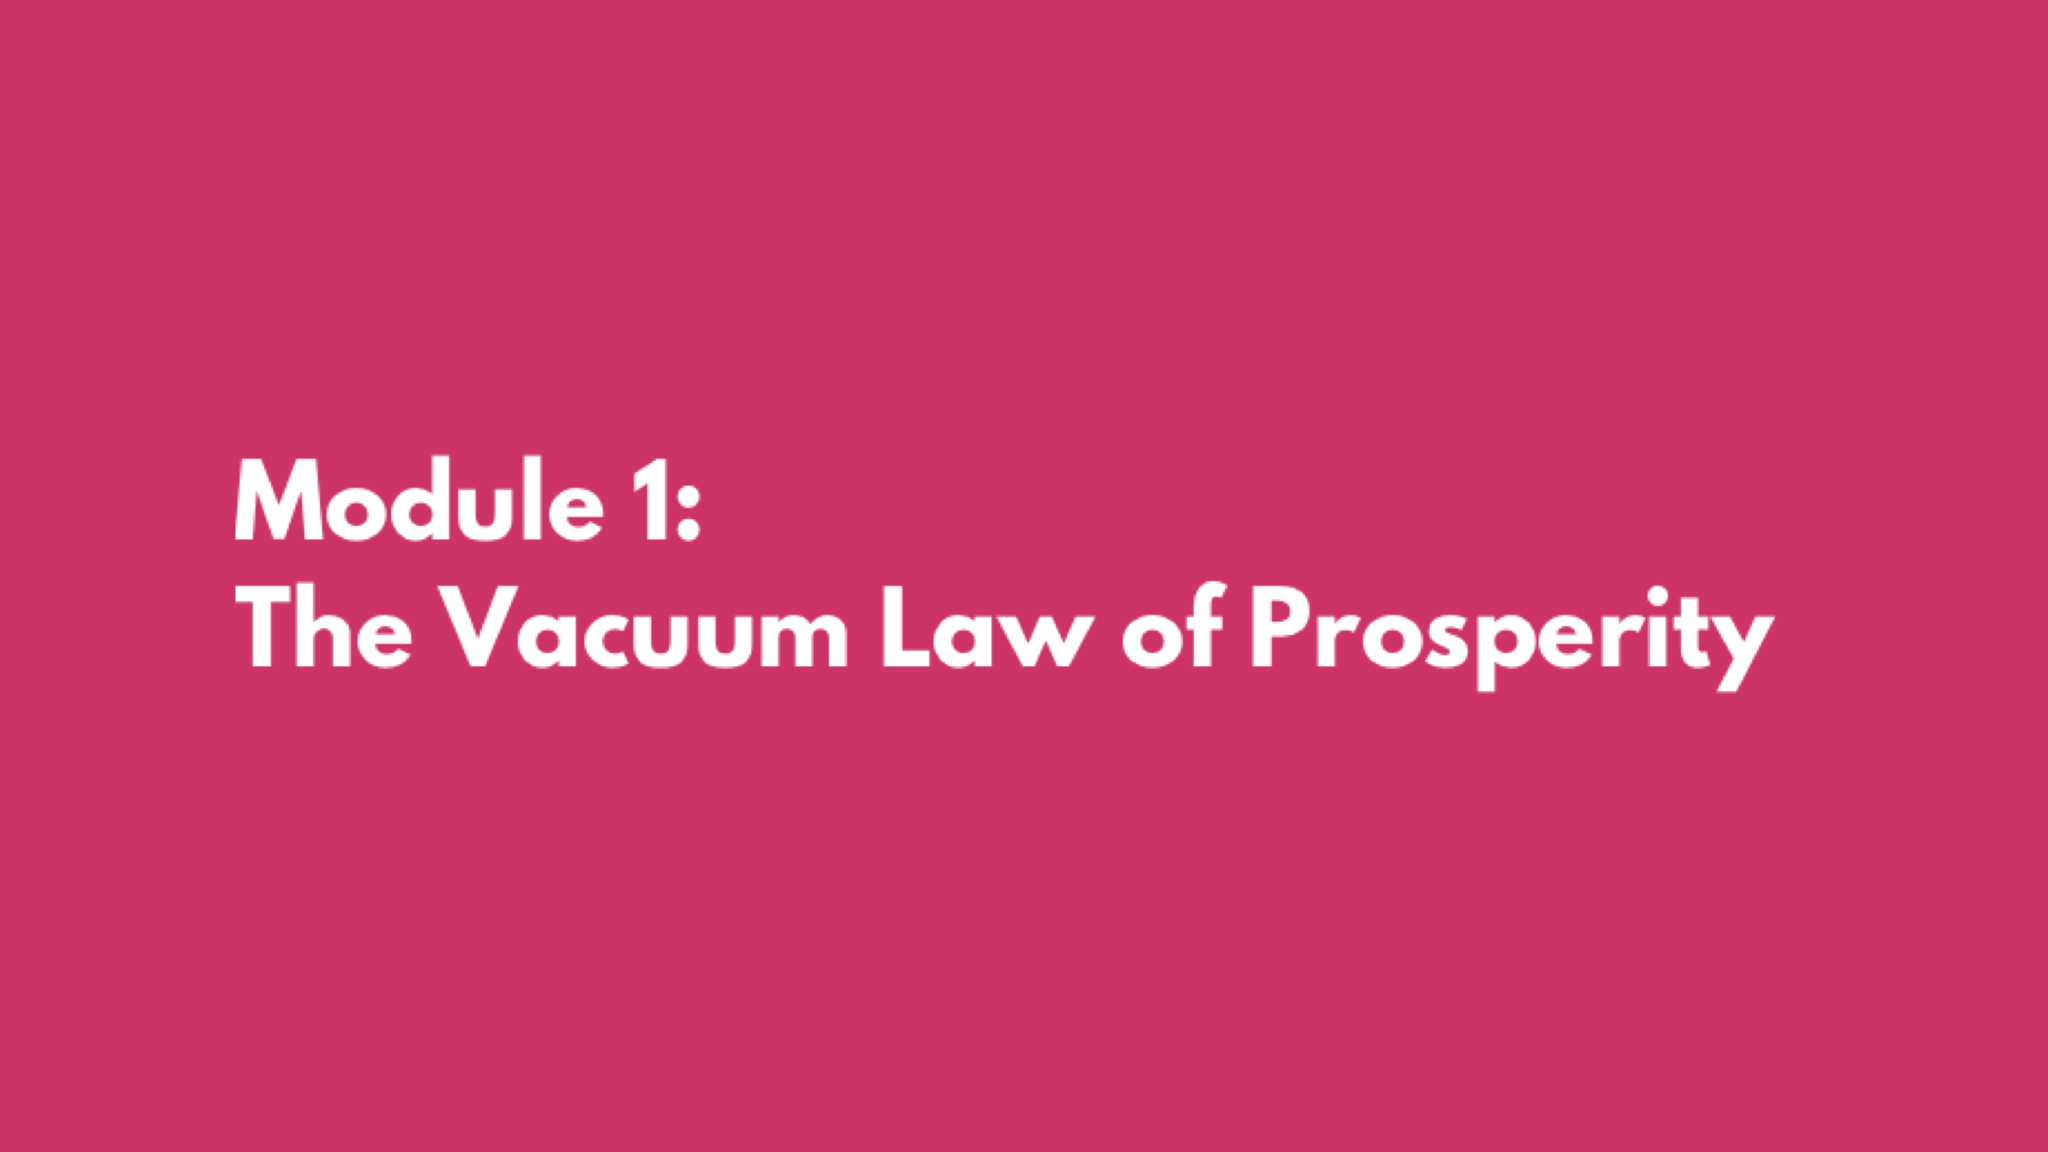 Module 1: The Vacuum Law of Prosperity